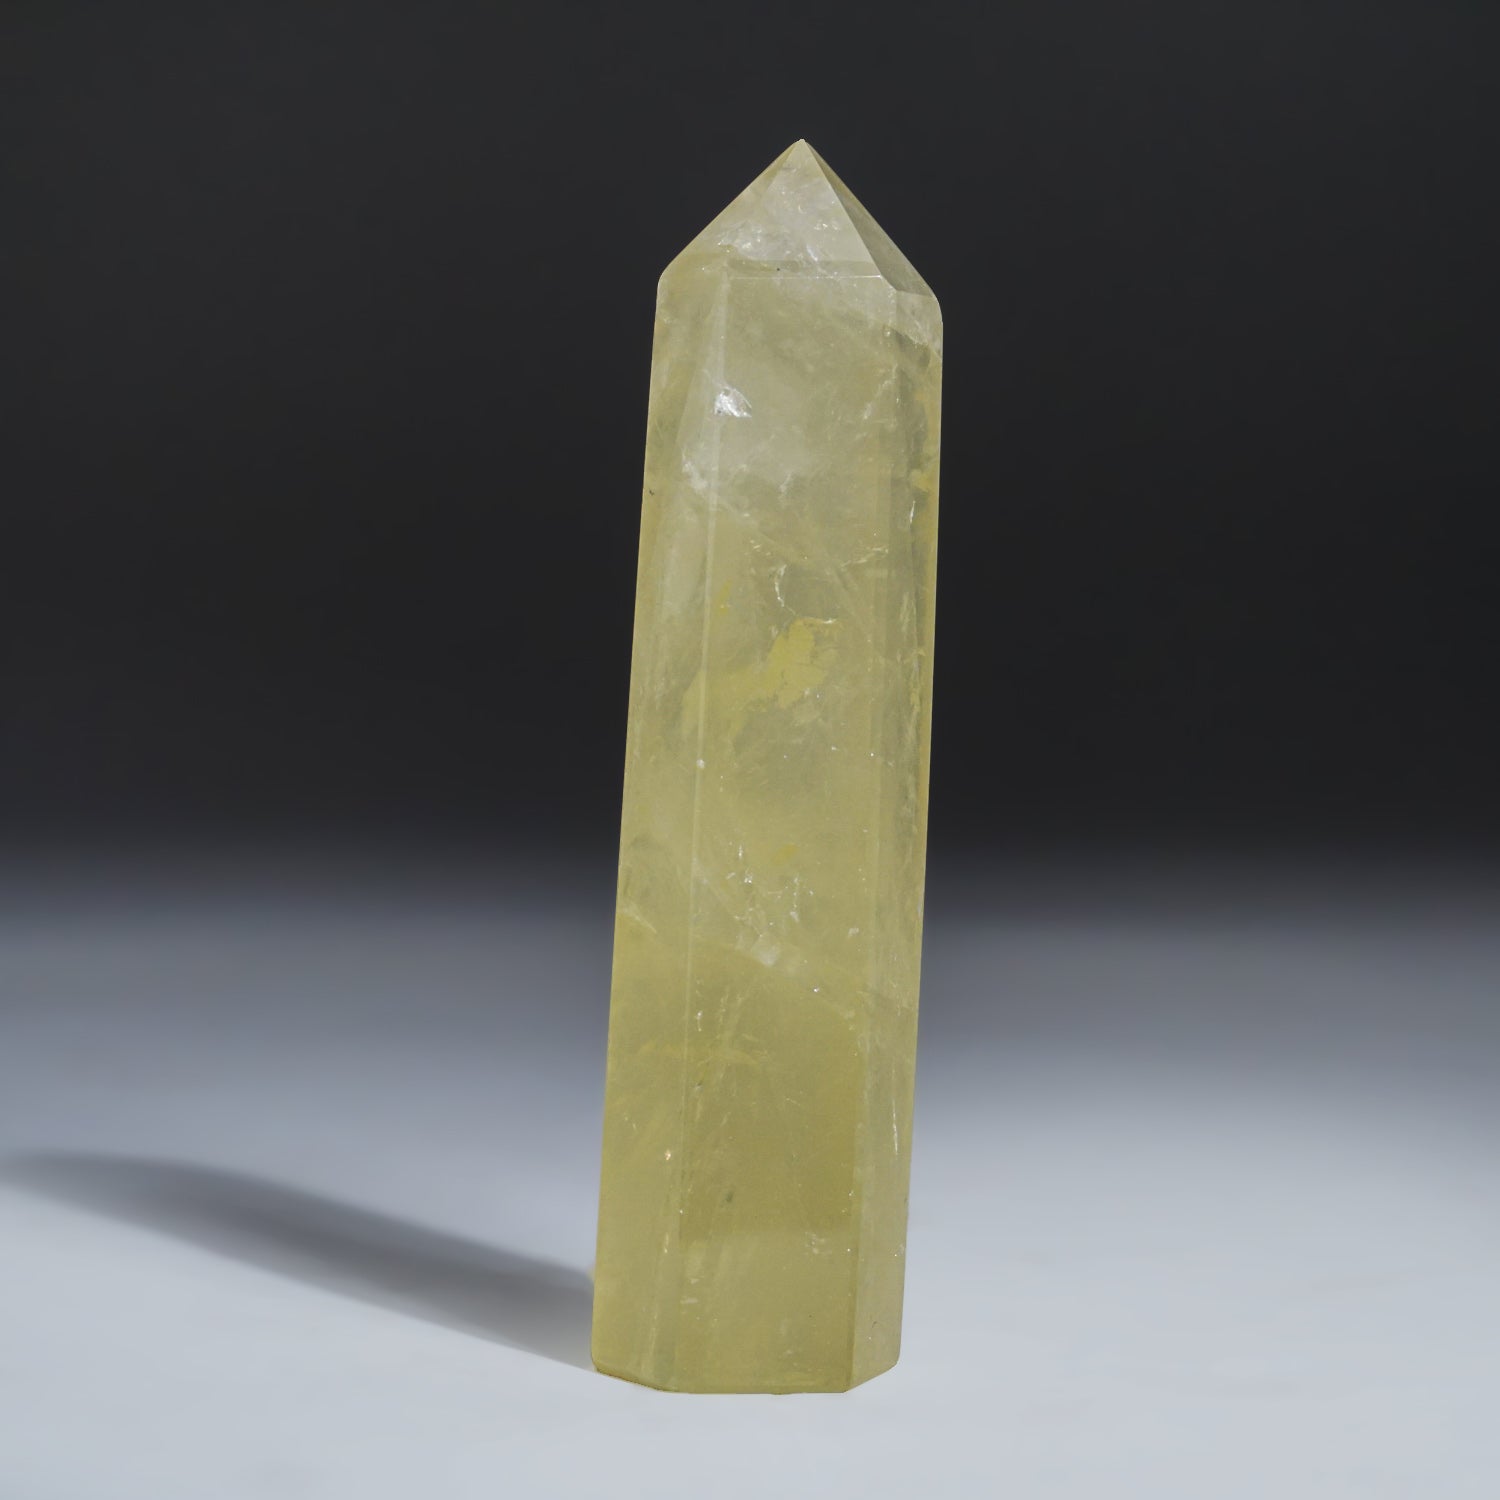 Polished Lemon Quartz Crystal Point from Brazil (150.9 grams)